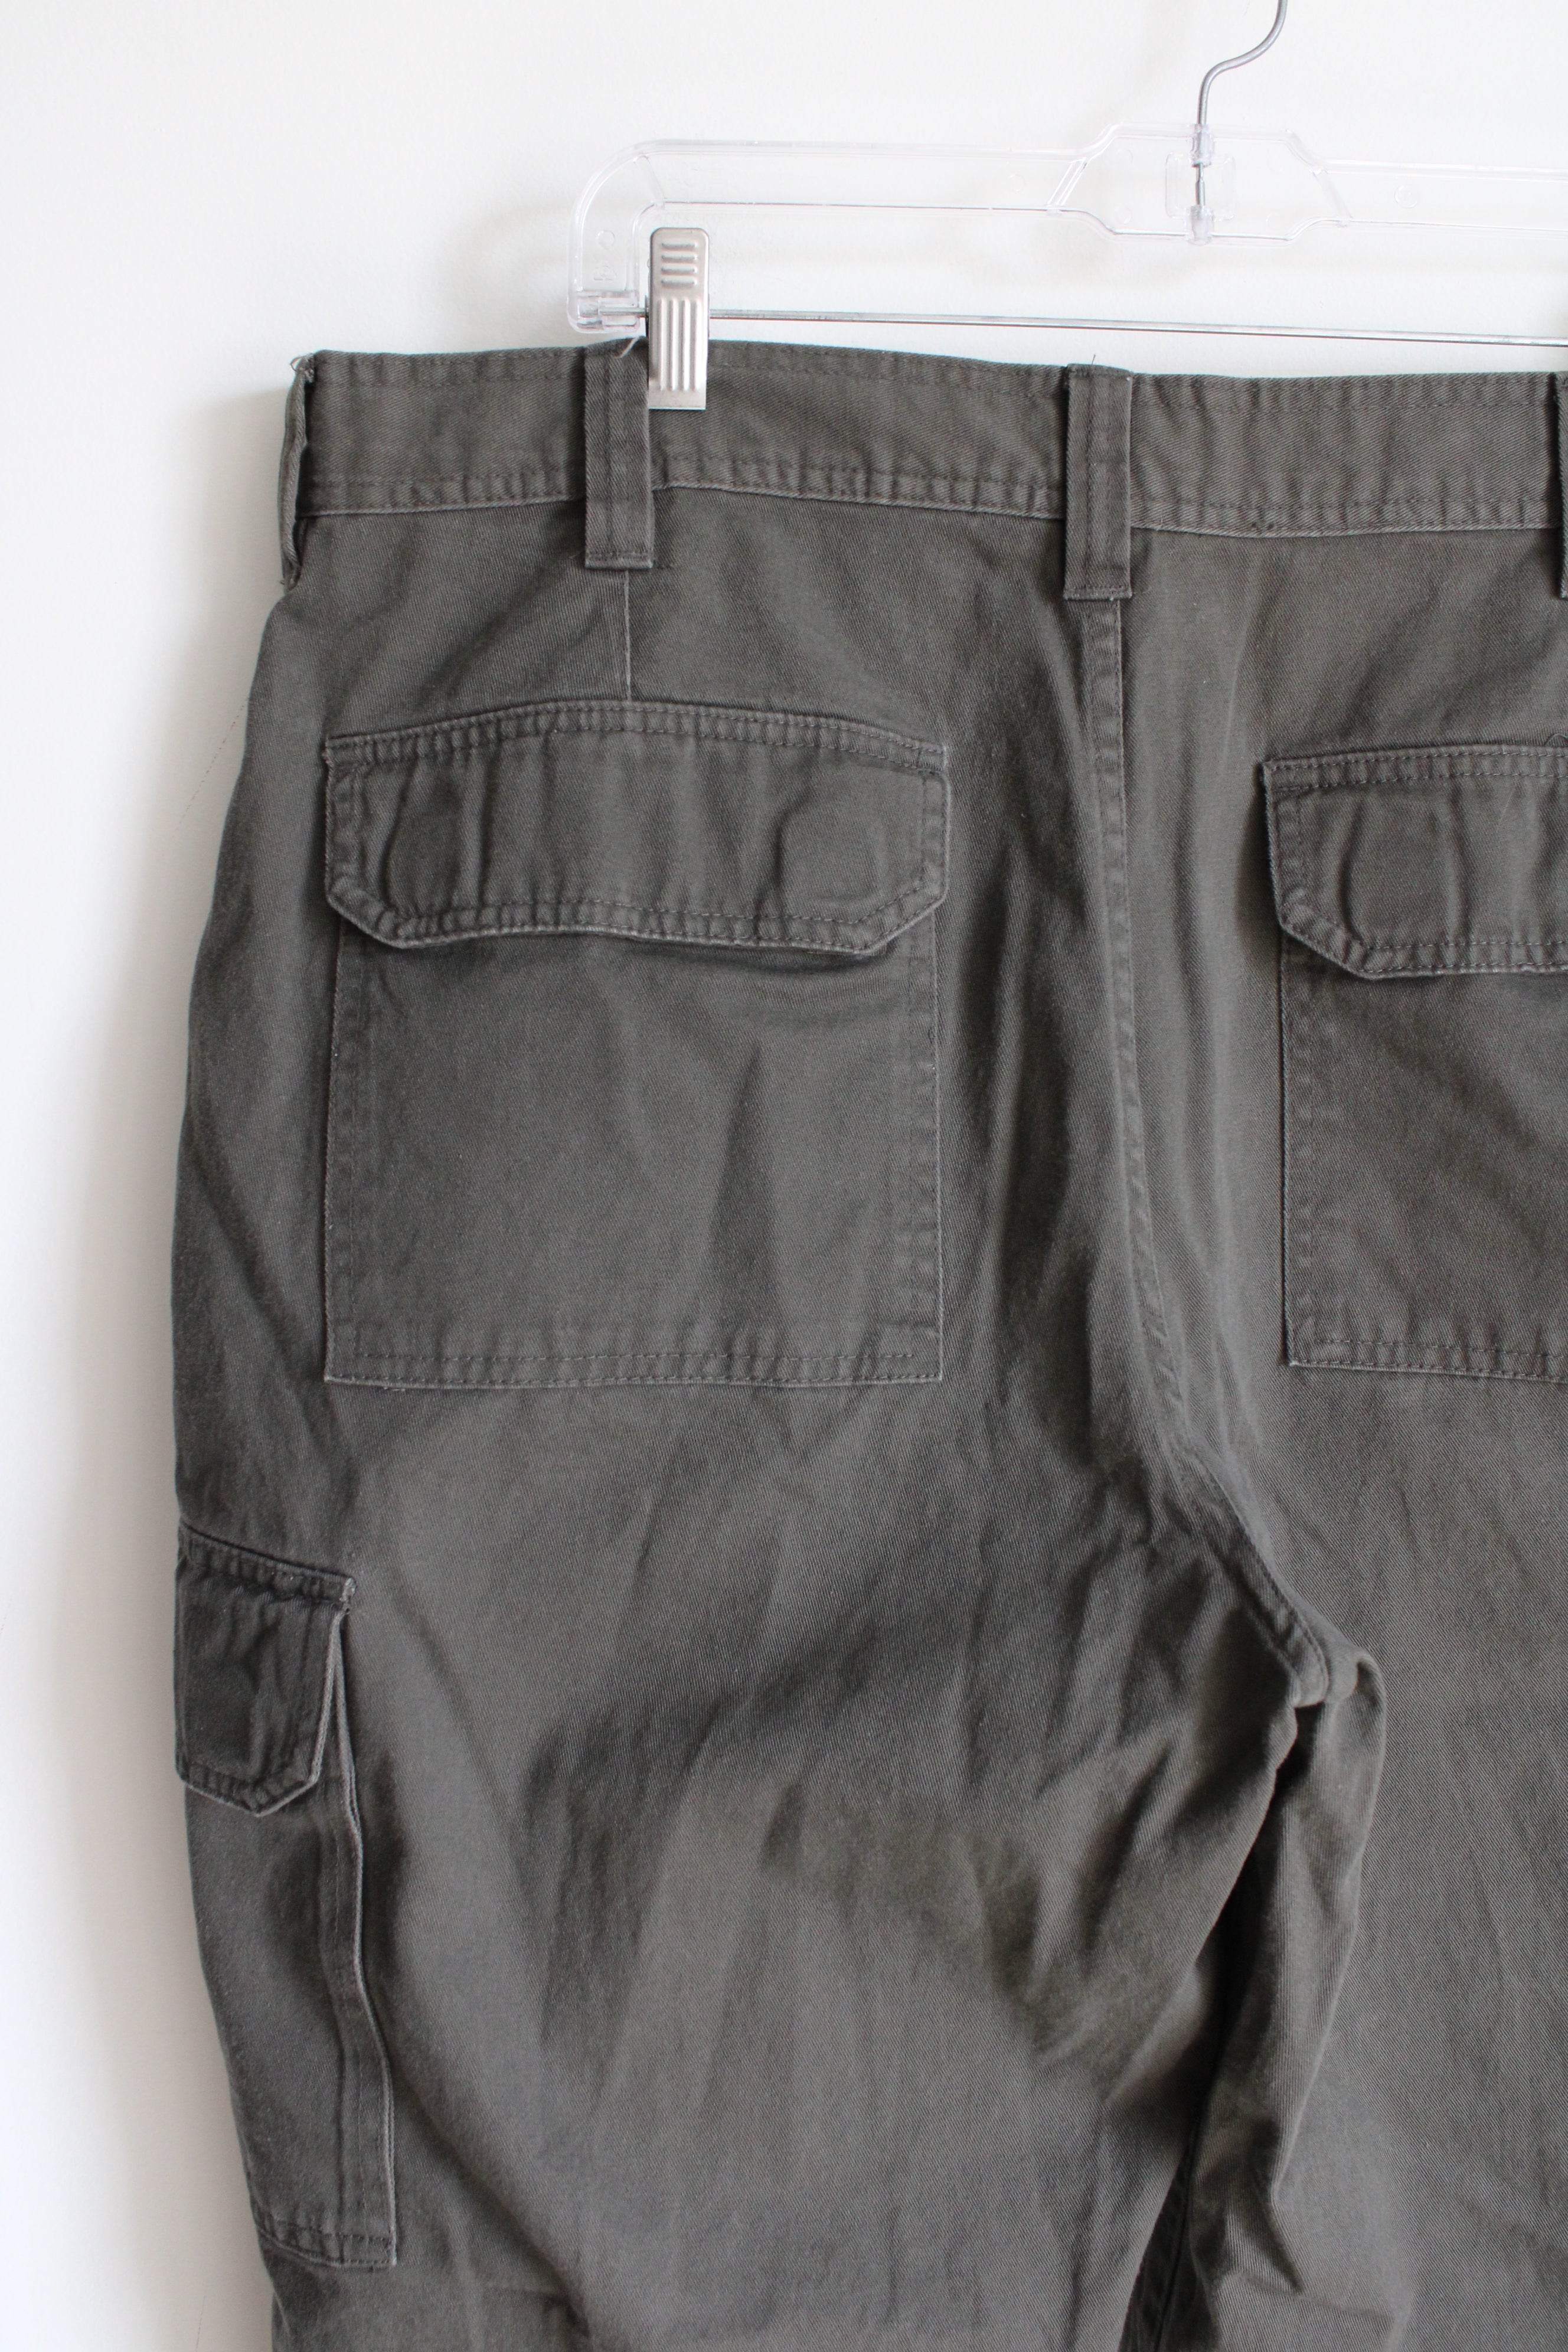 Basic Editions Green Khaki Cargo Pants | 40X30